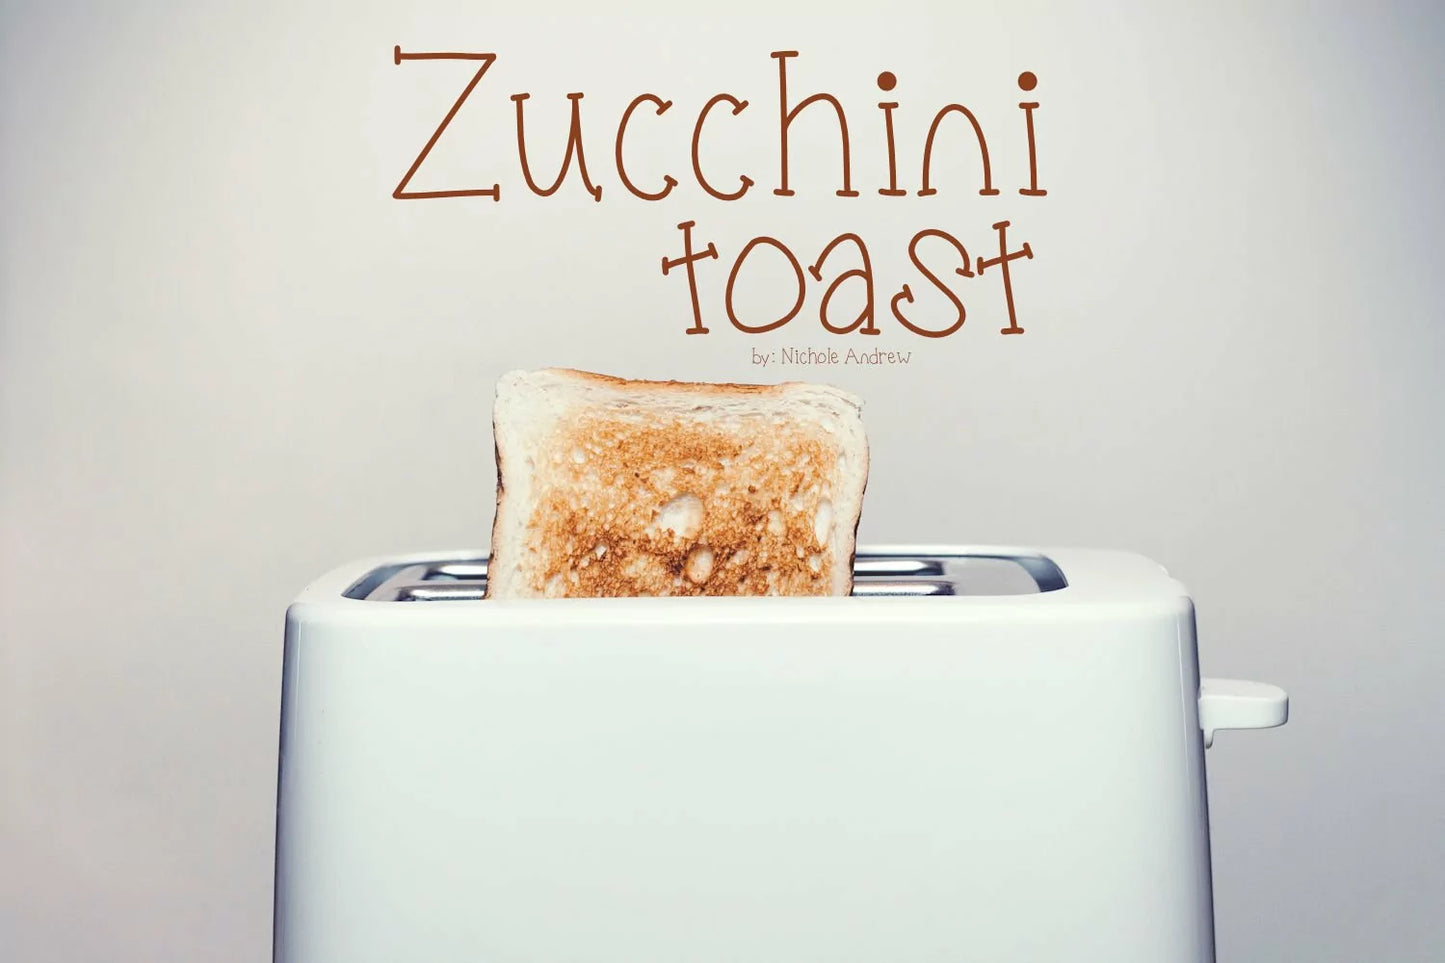 Zucchini Toast - A Handwritten Font